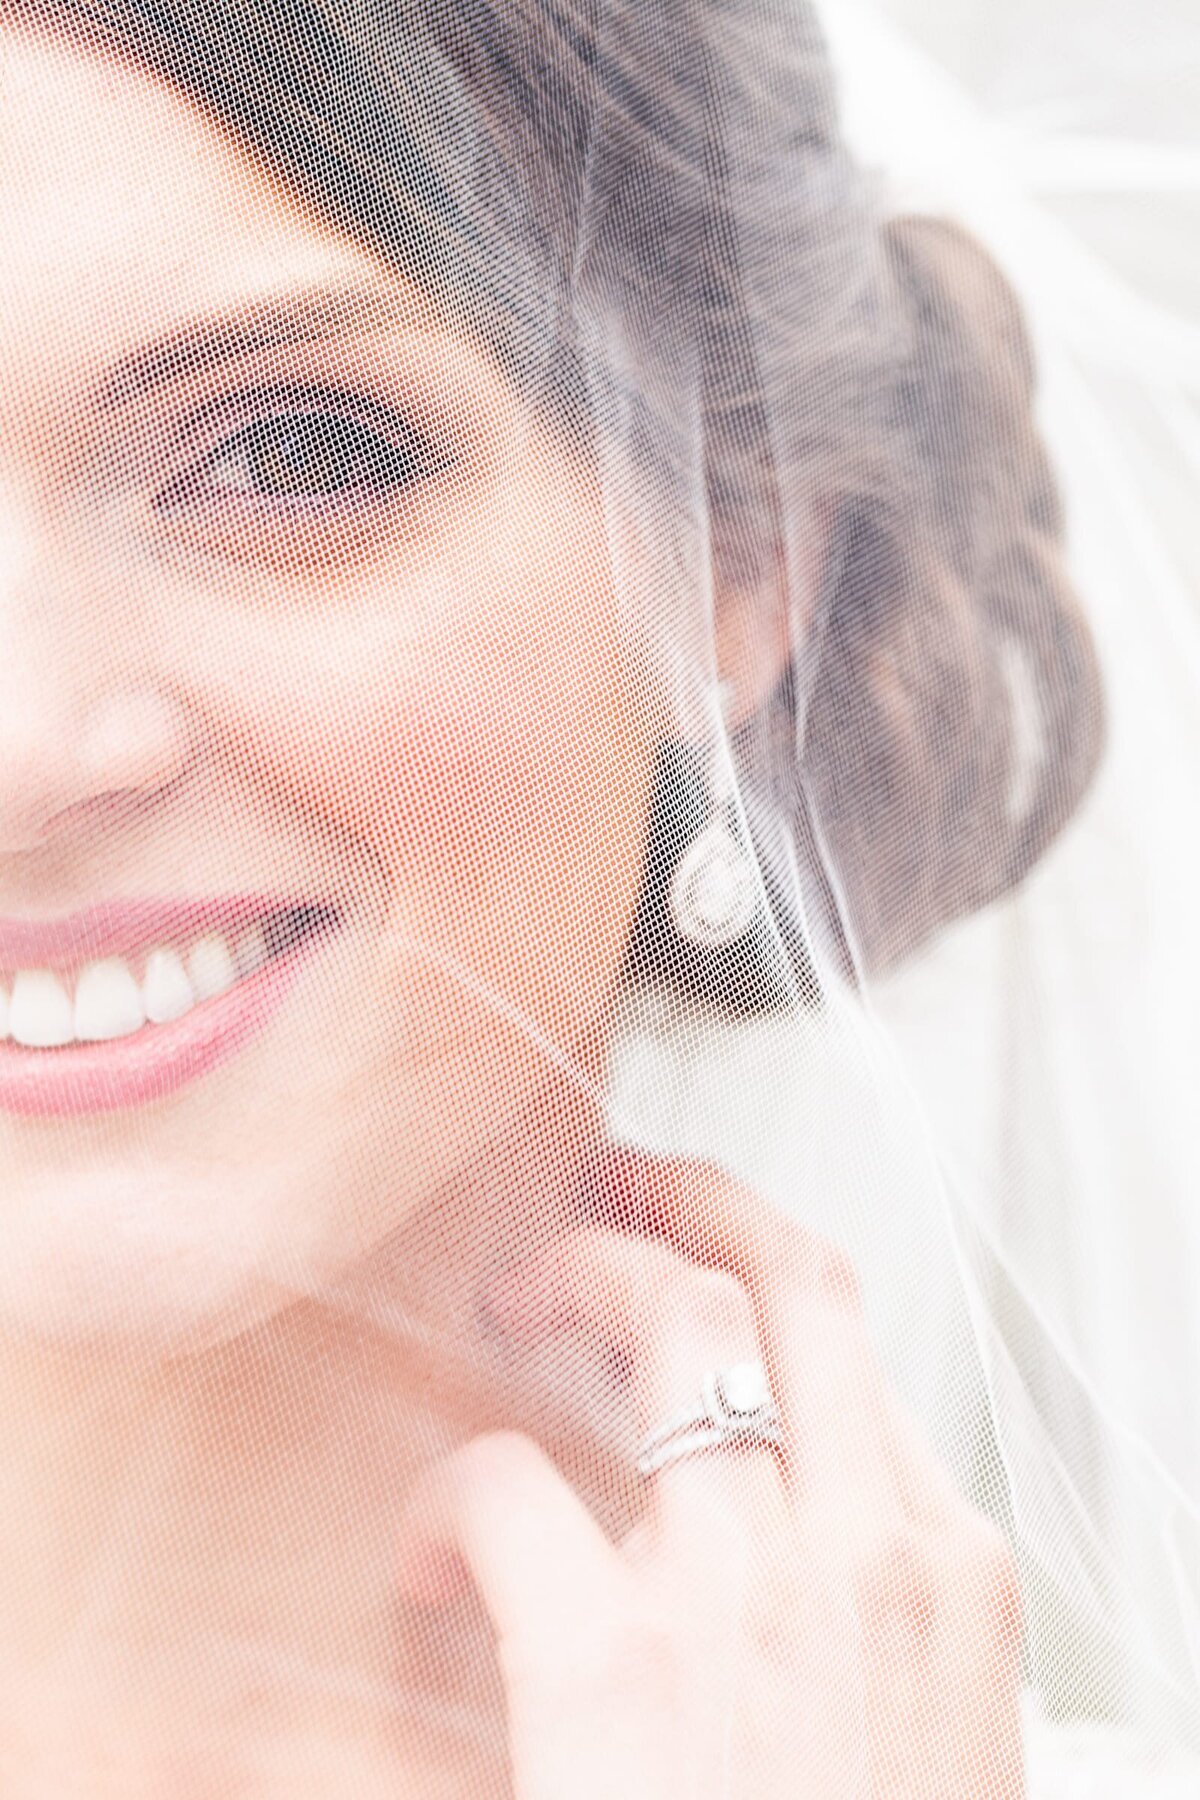 bride-veil-teardrop-earrings